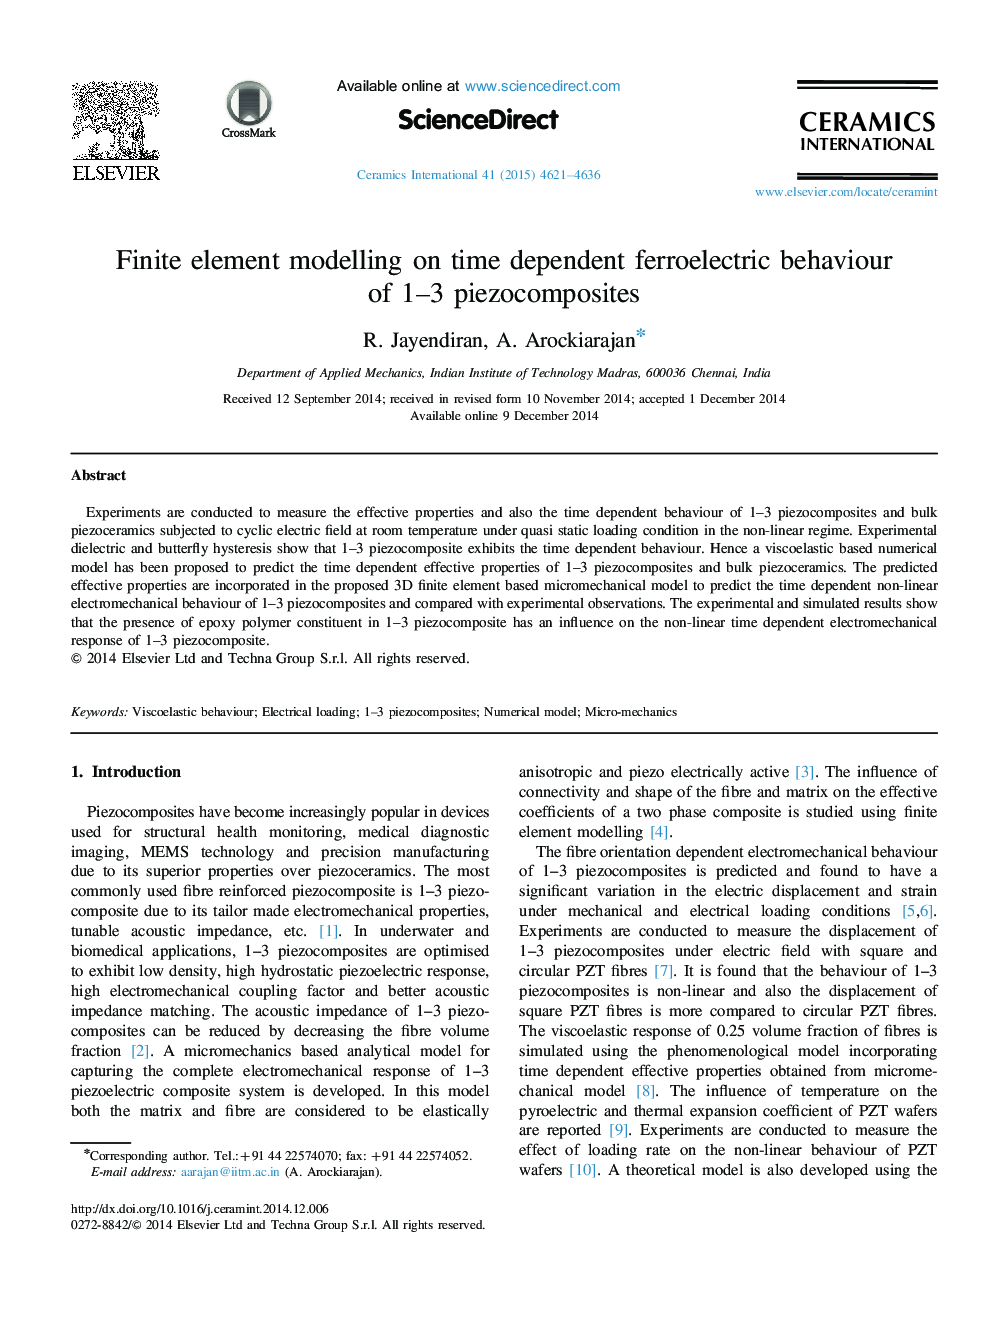 Finite element modelling on time dependent ferroelectric behaviour of 1–3 piezocomposites